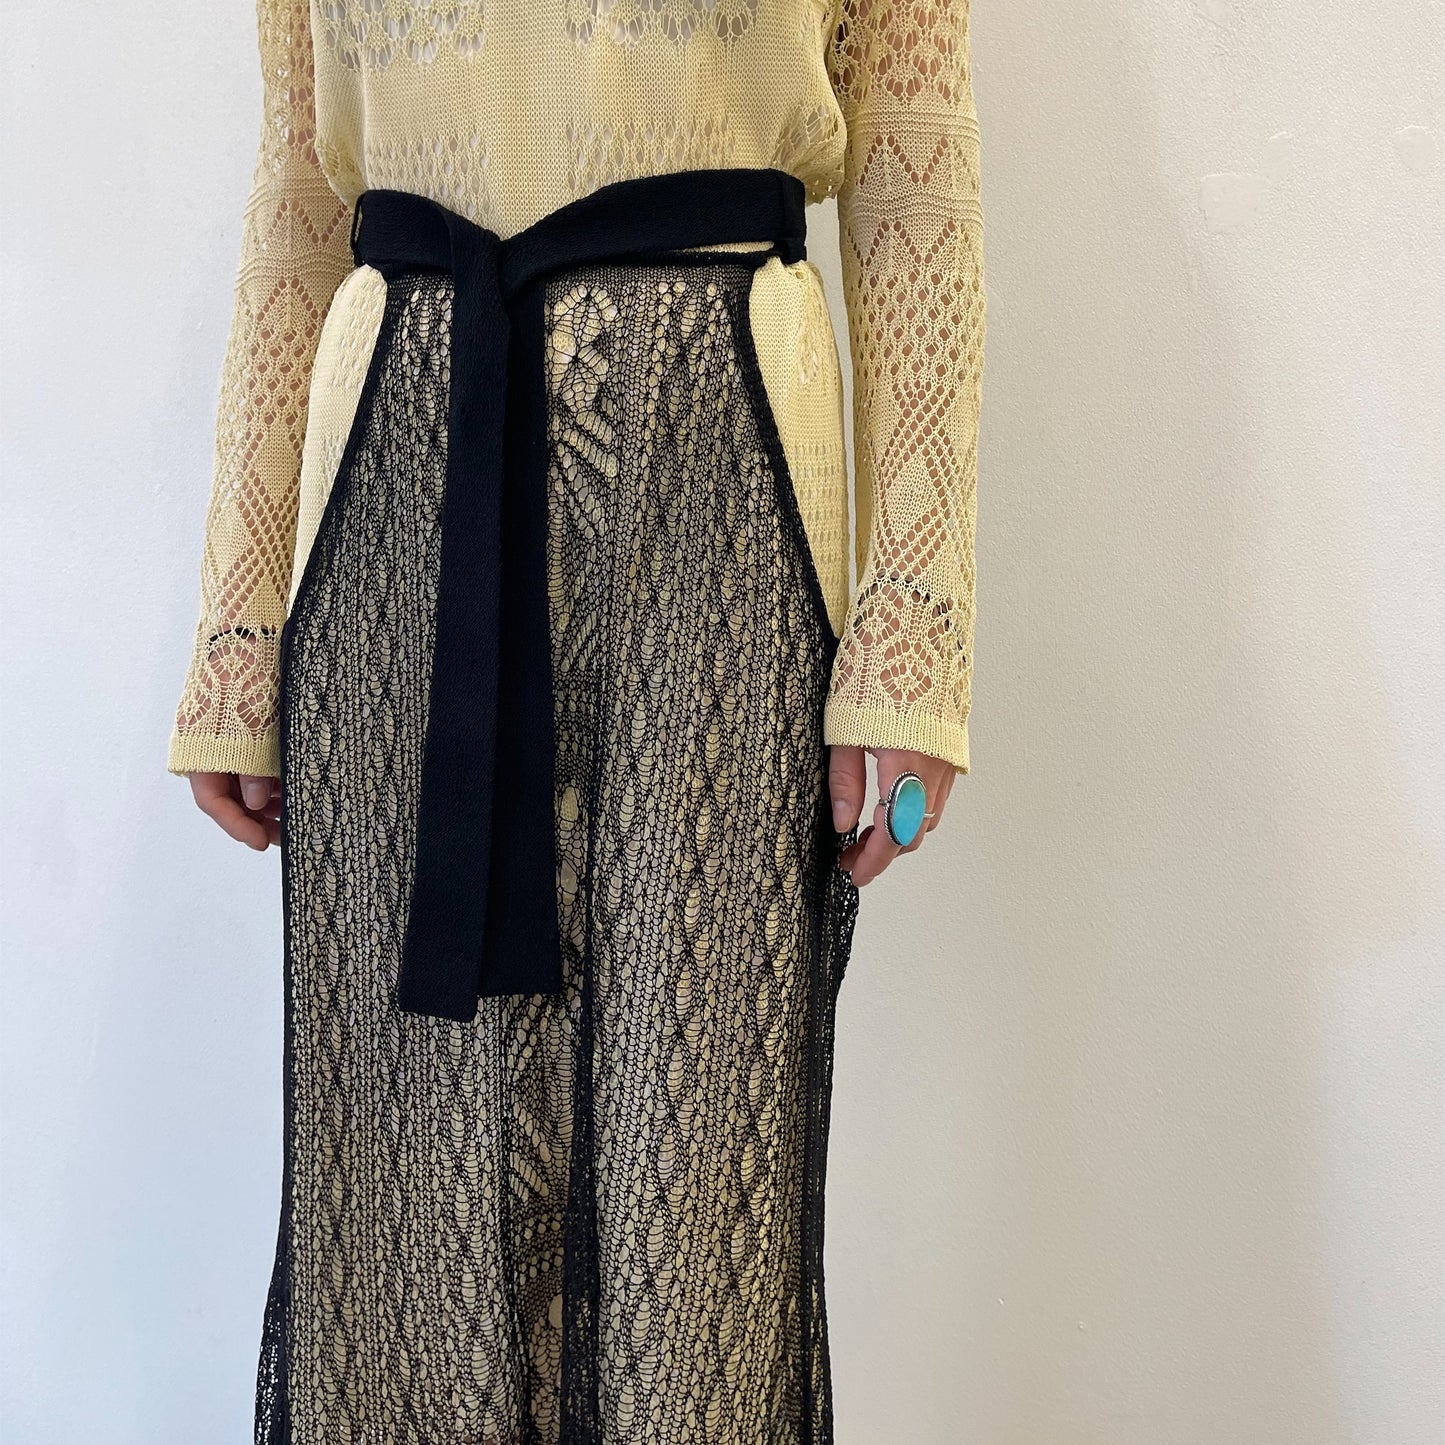 nunny apron skirt / Black / ニットエプロンスカート | シープ 